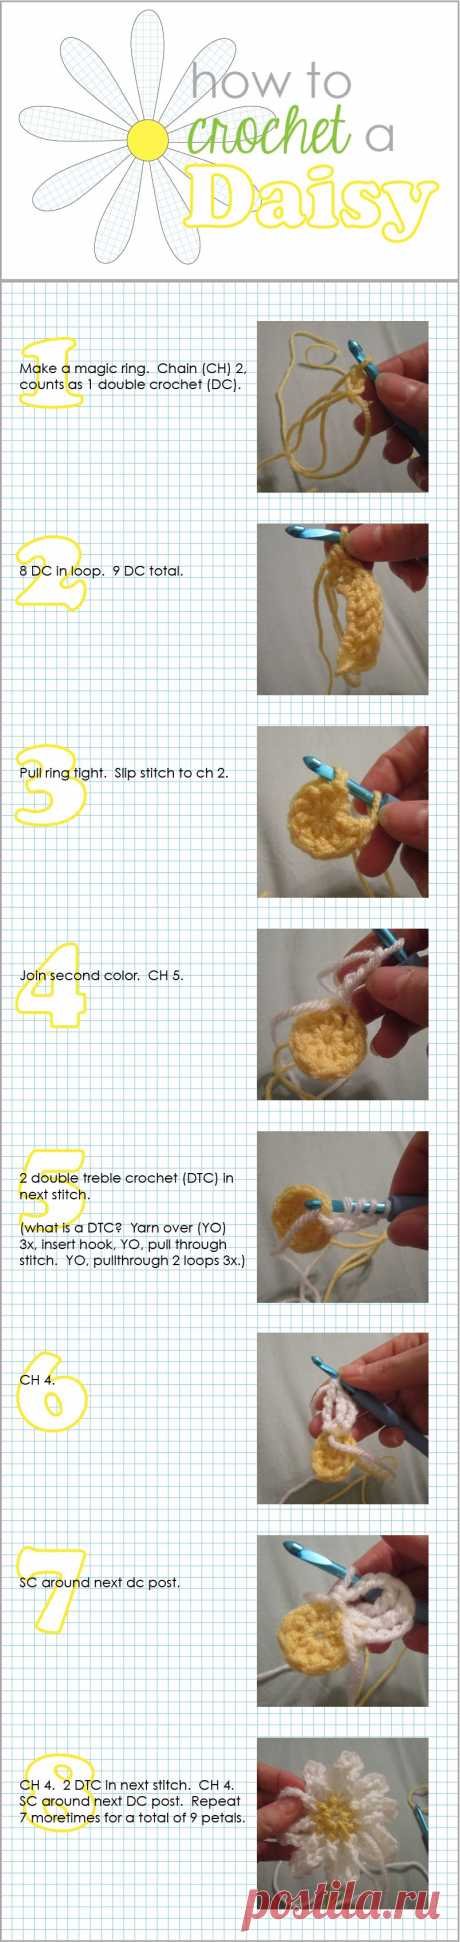 How to crochet a daisy.